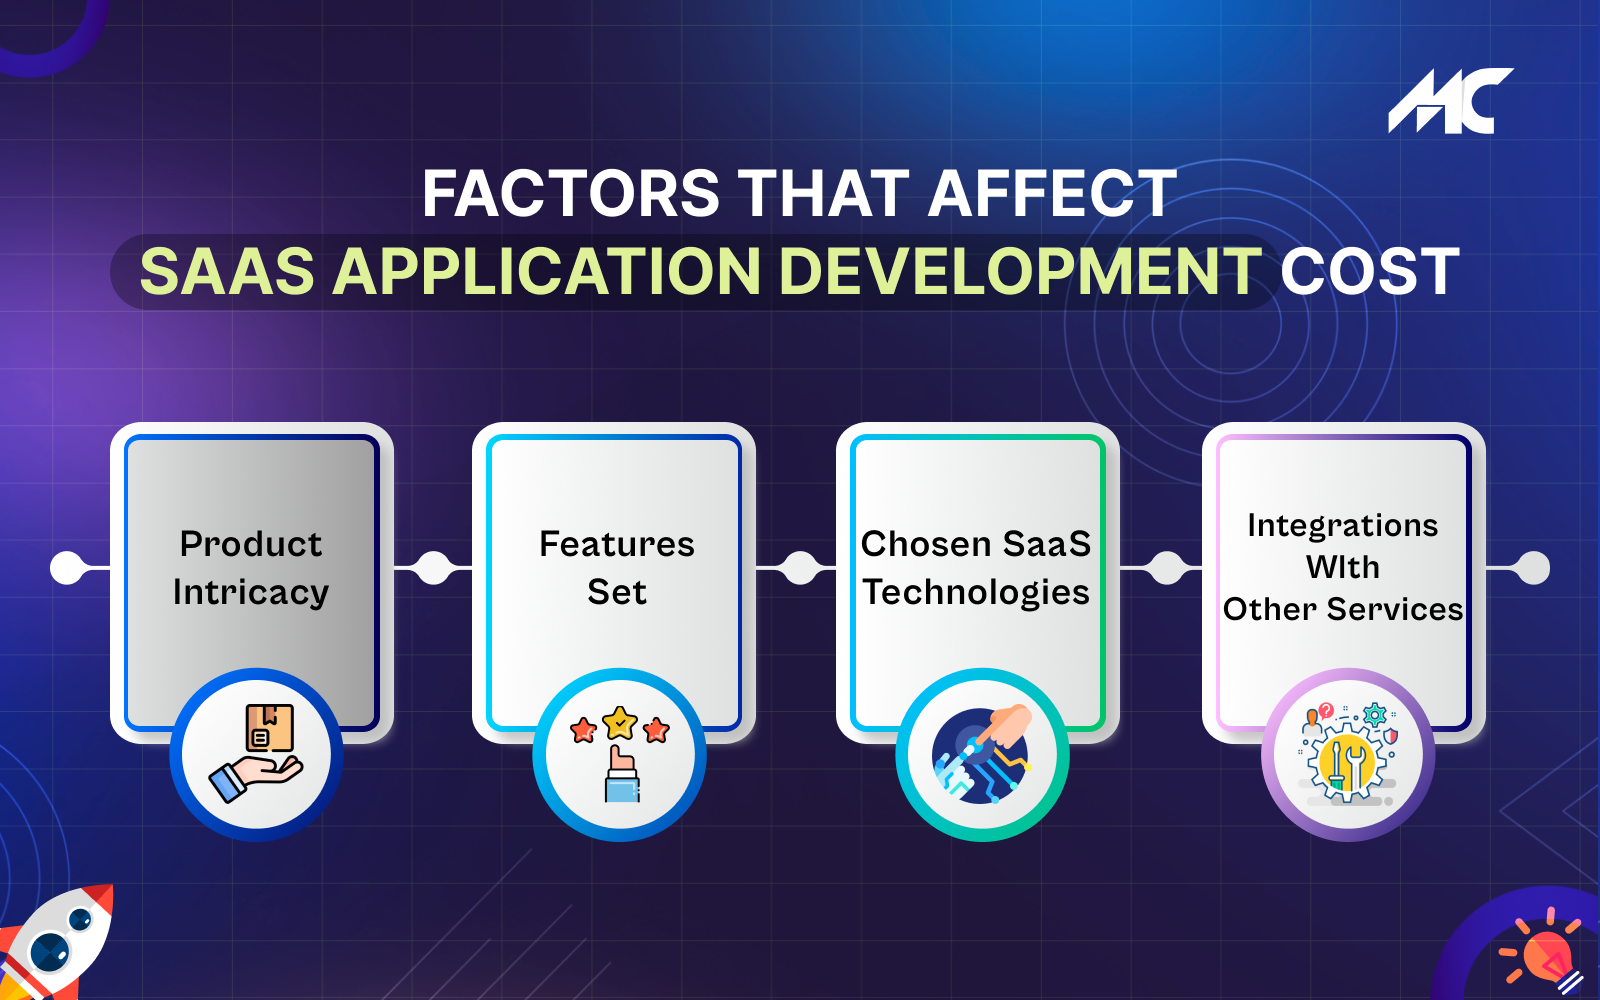 <img src="Factors-that-Affect-SaaS-App-Development-Cost.png" alt="Factors-that-Affect-SaaS-App-Development-Cost">